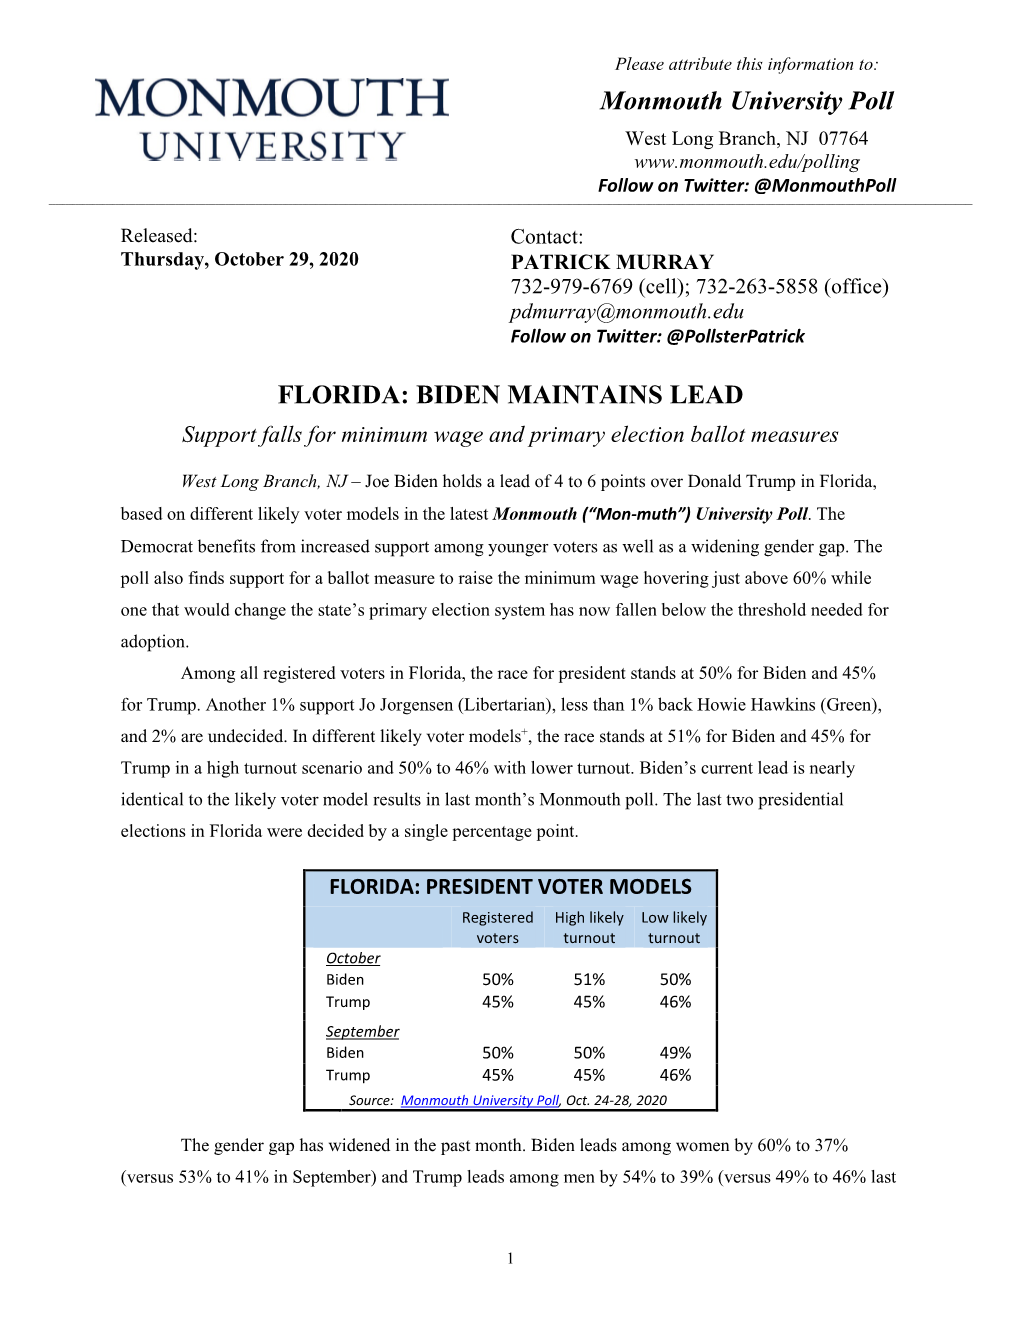 Monmouth University Poll FLORIDA: BIDEN MAINTAINS LEAD